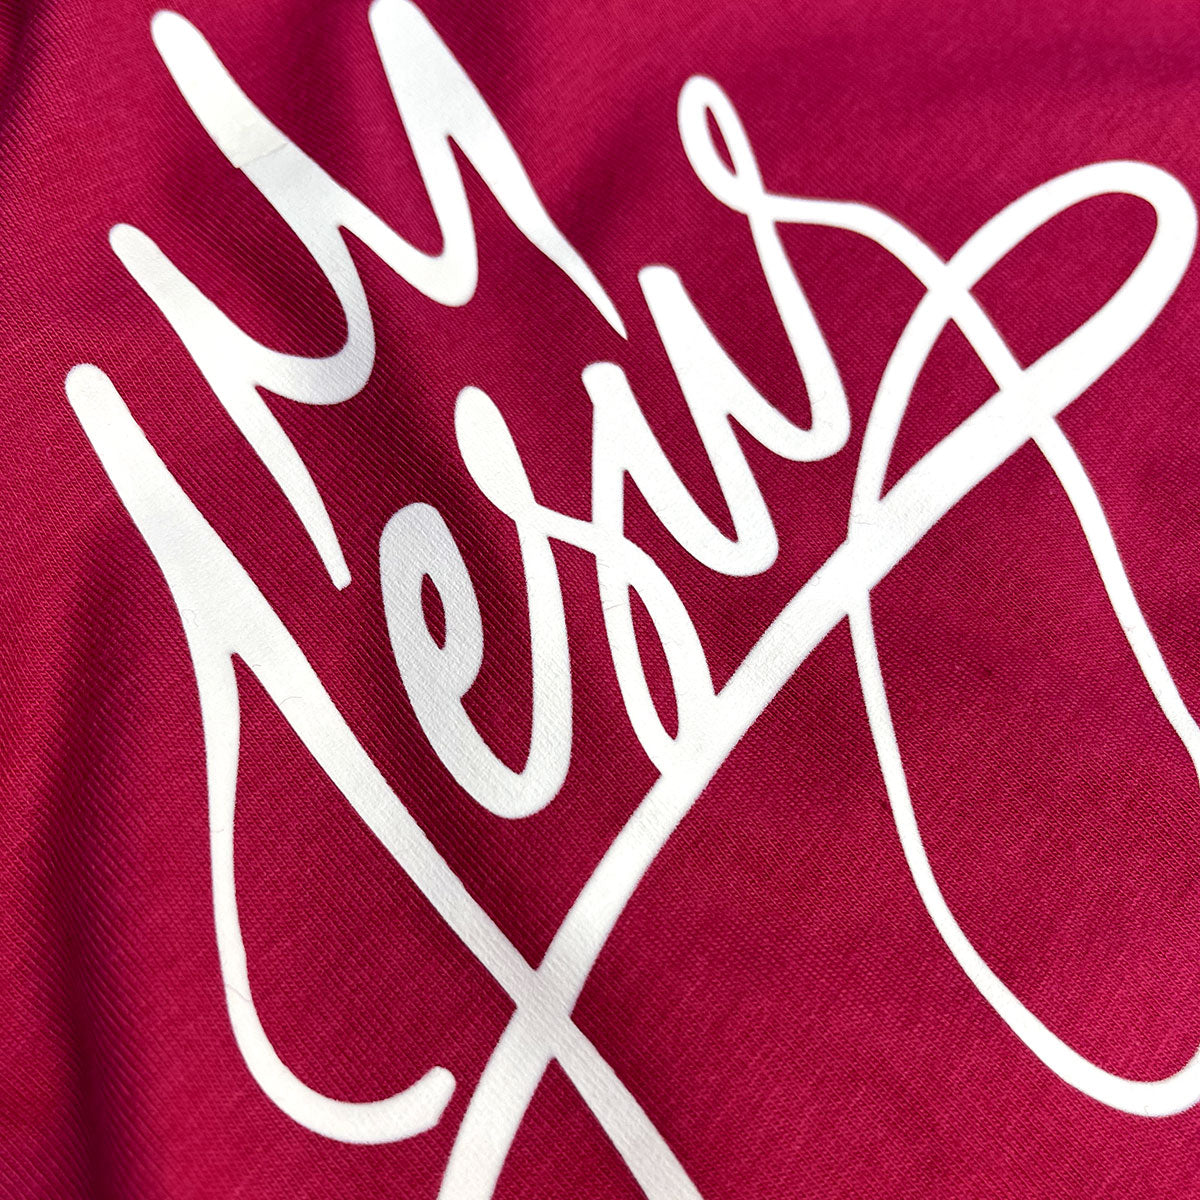 Camiseta Feminina Pink Jesus Coroa